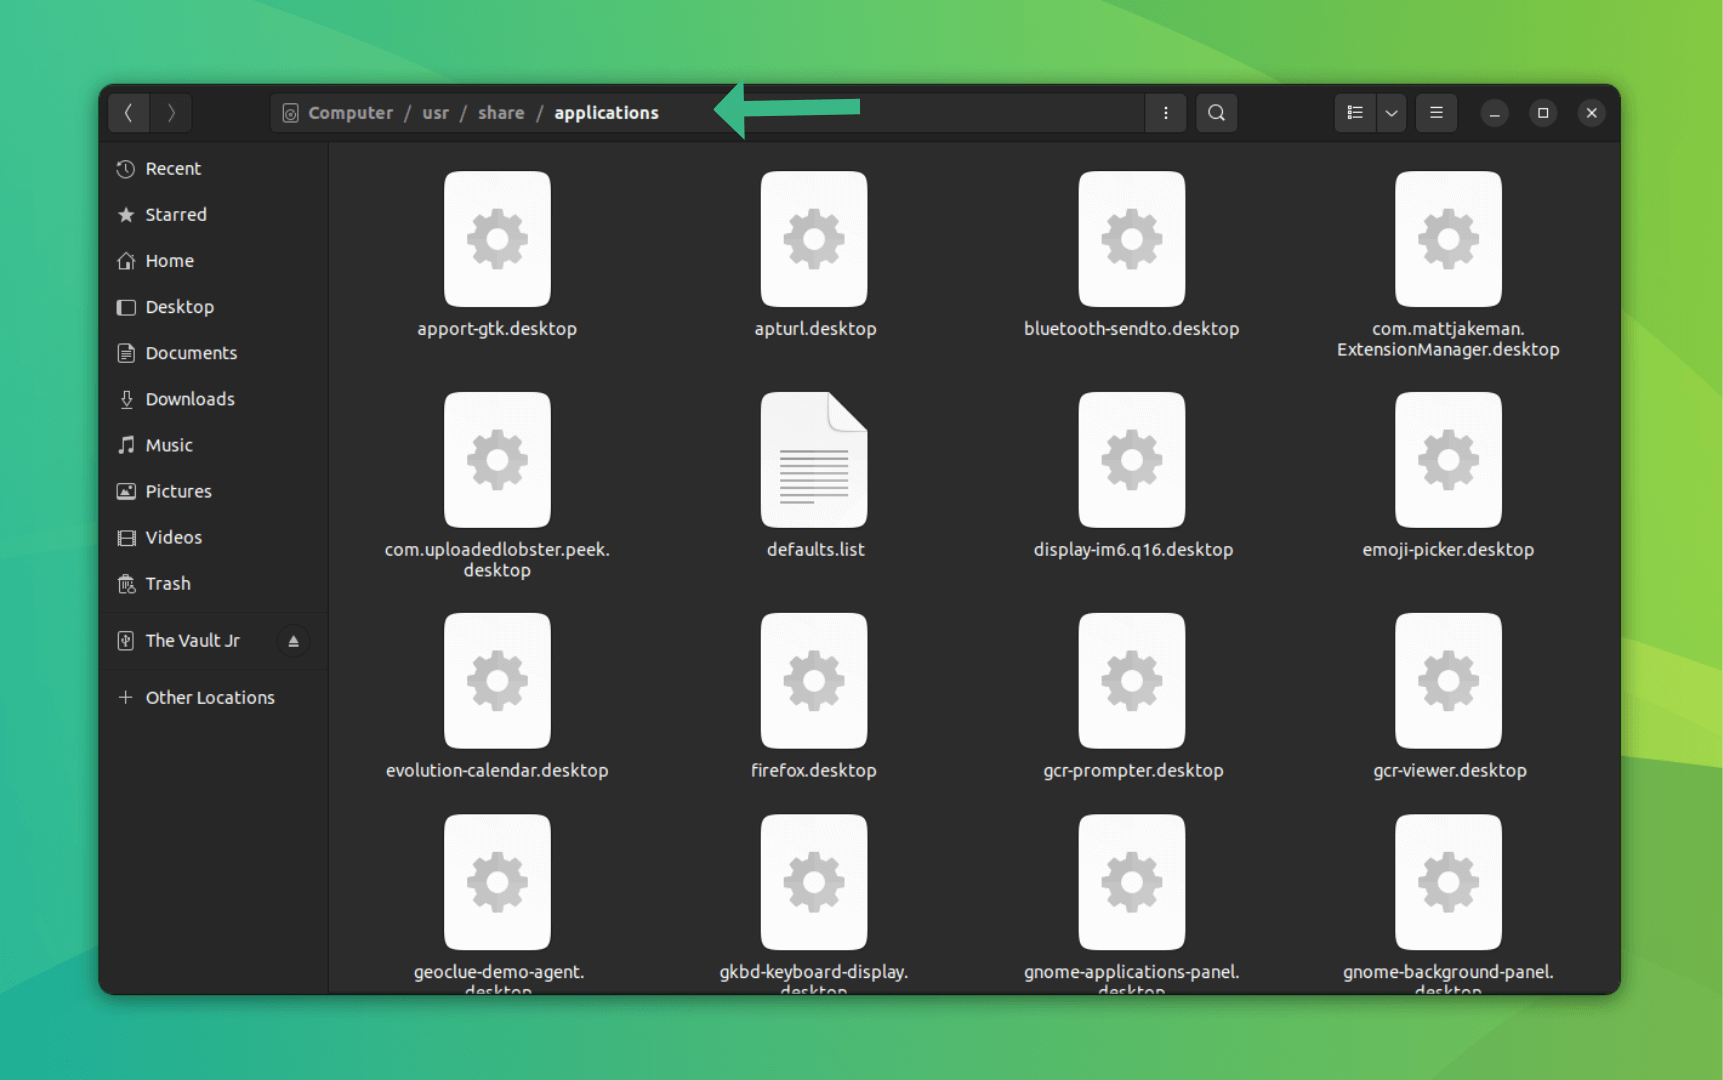 a screenshot of the applications folder under the usr directory on ubuntu